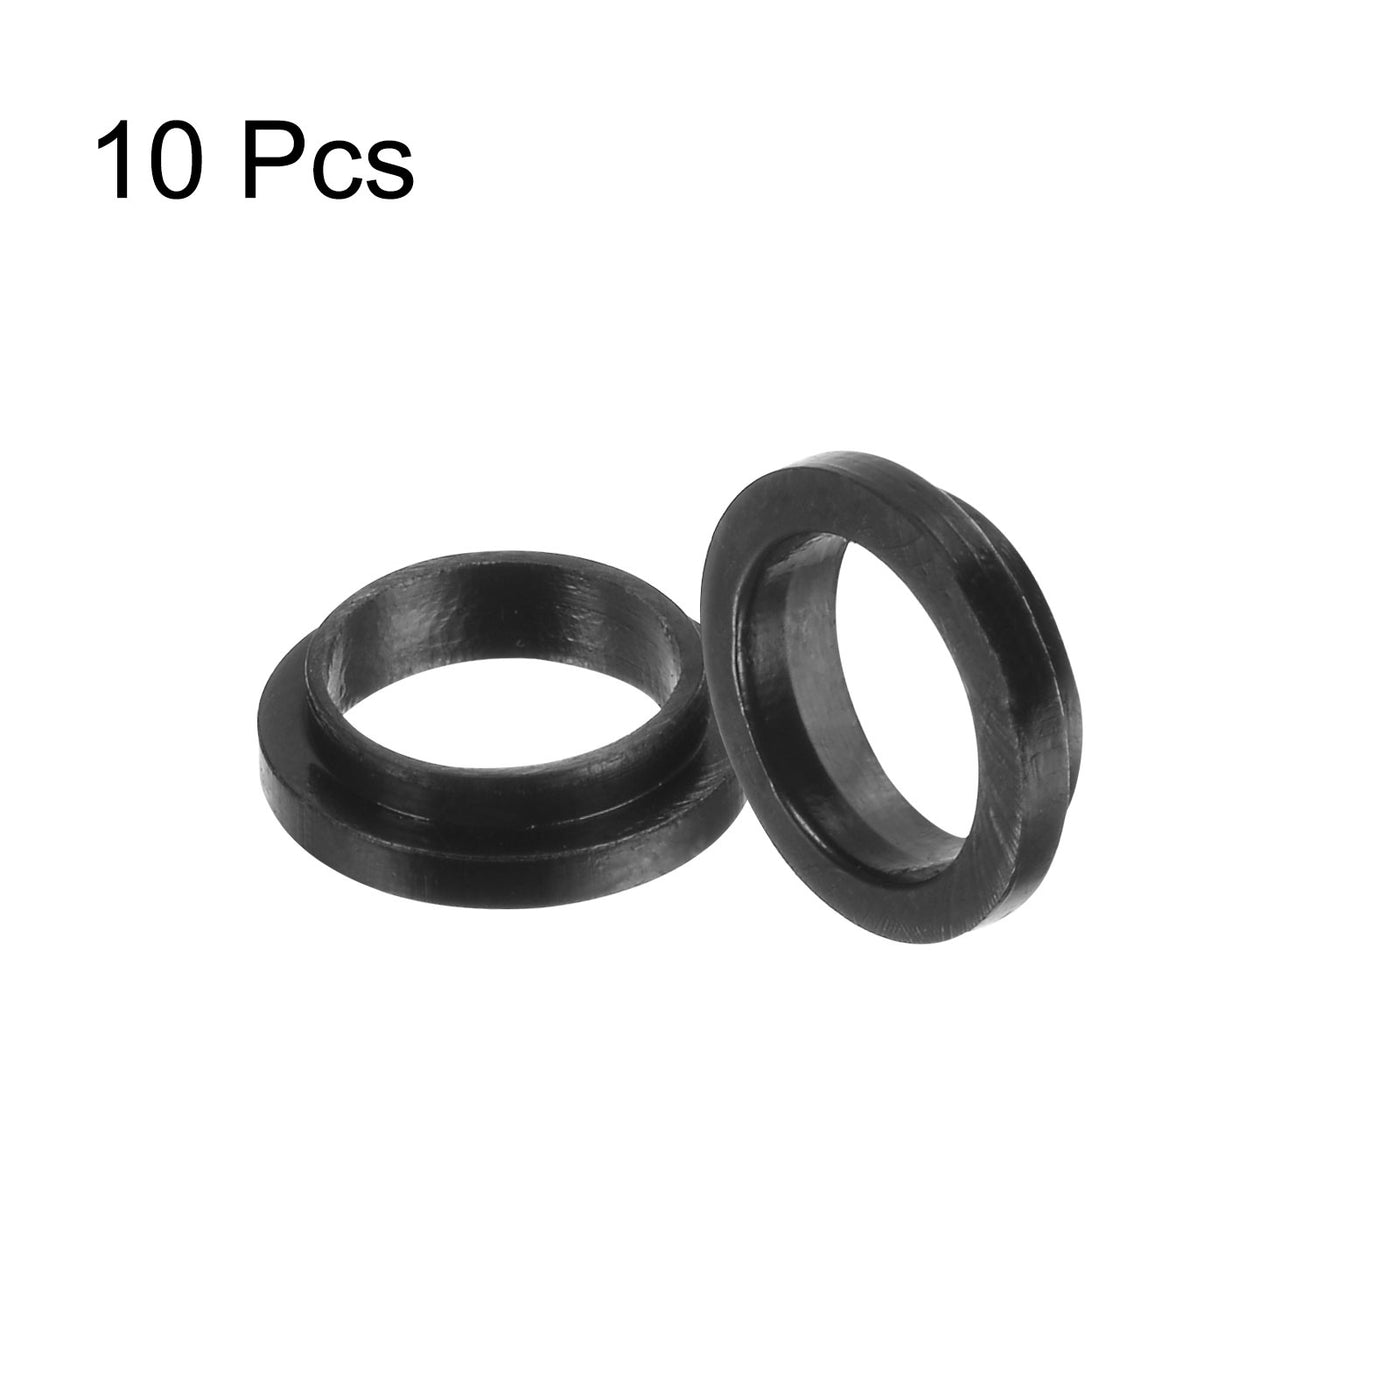 uxcell Uxcell 10pcs Flanged Sleeve Bearings 8.5mm ID 9.4mm OD 3mm Length Nylon Bushings, Black